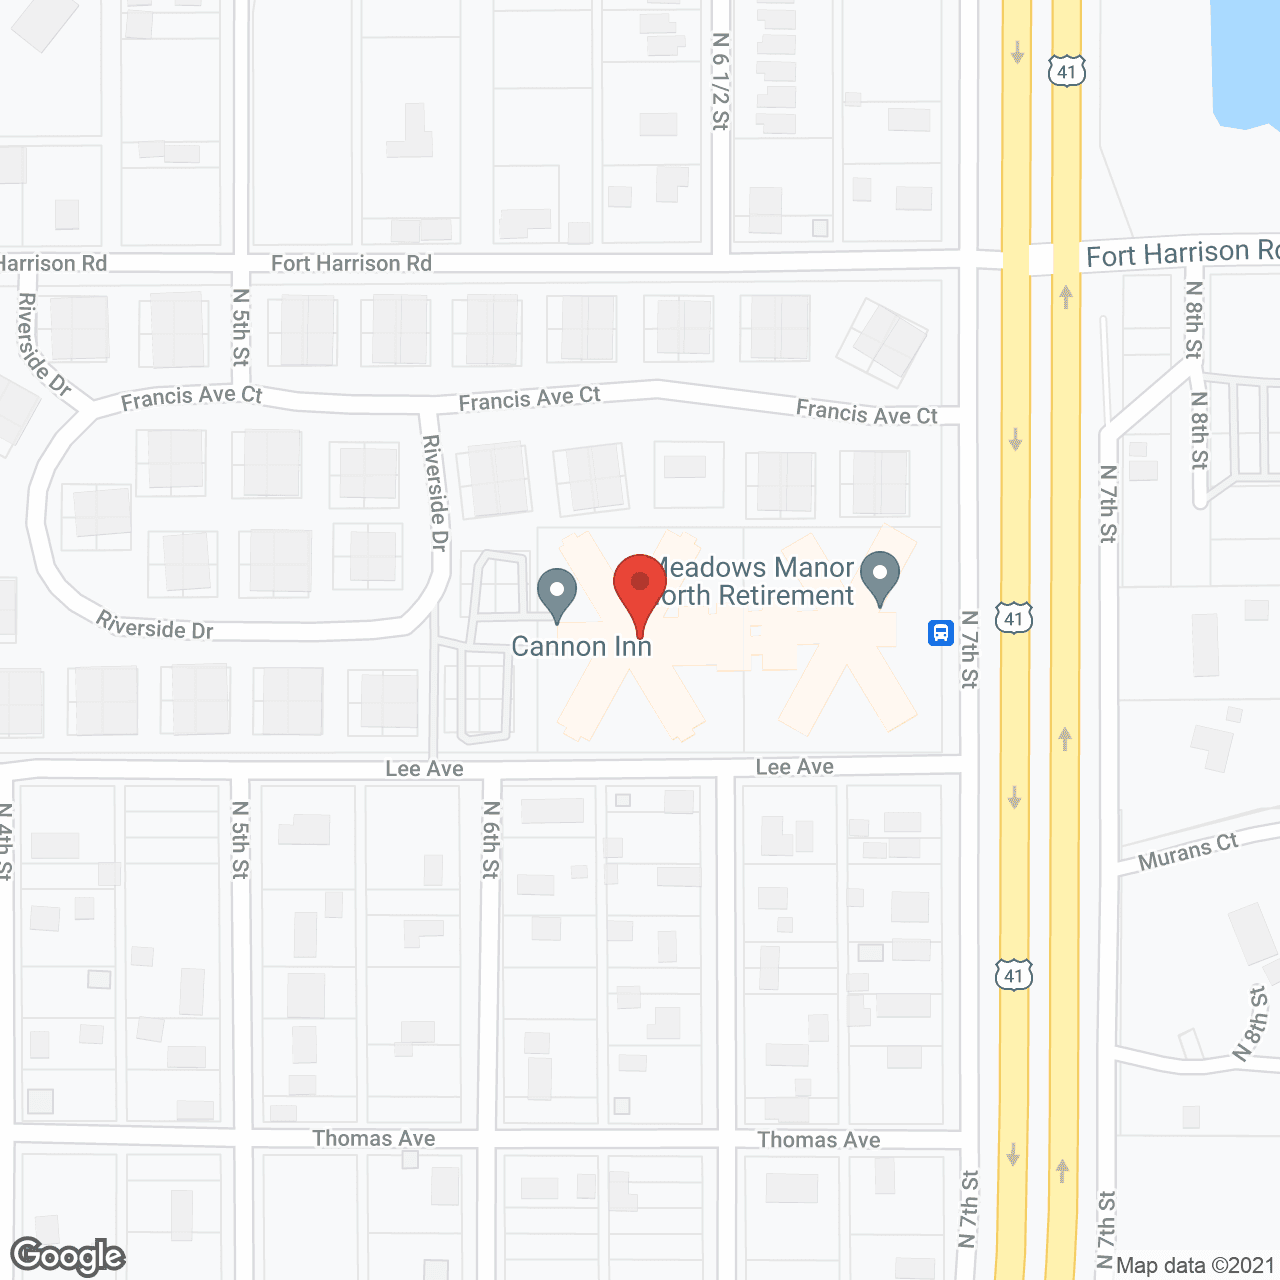 Cannon Inn in google map